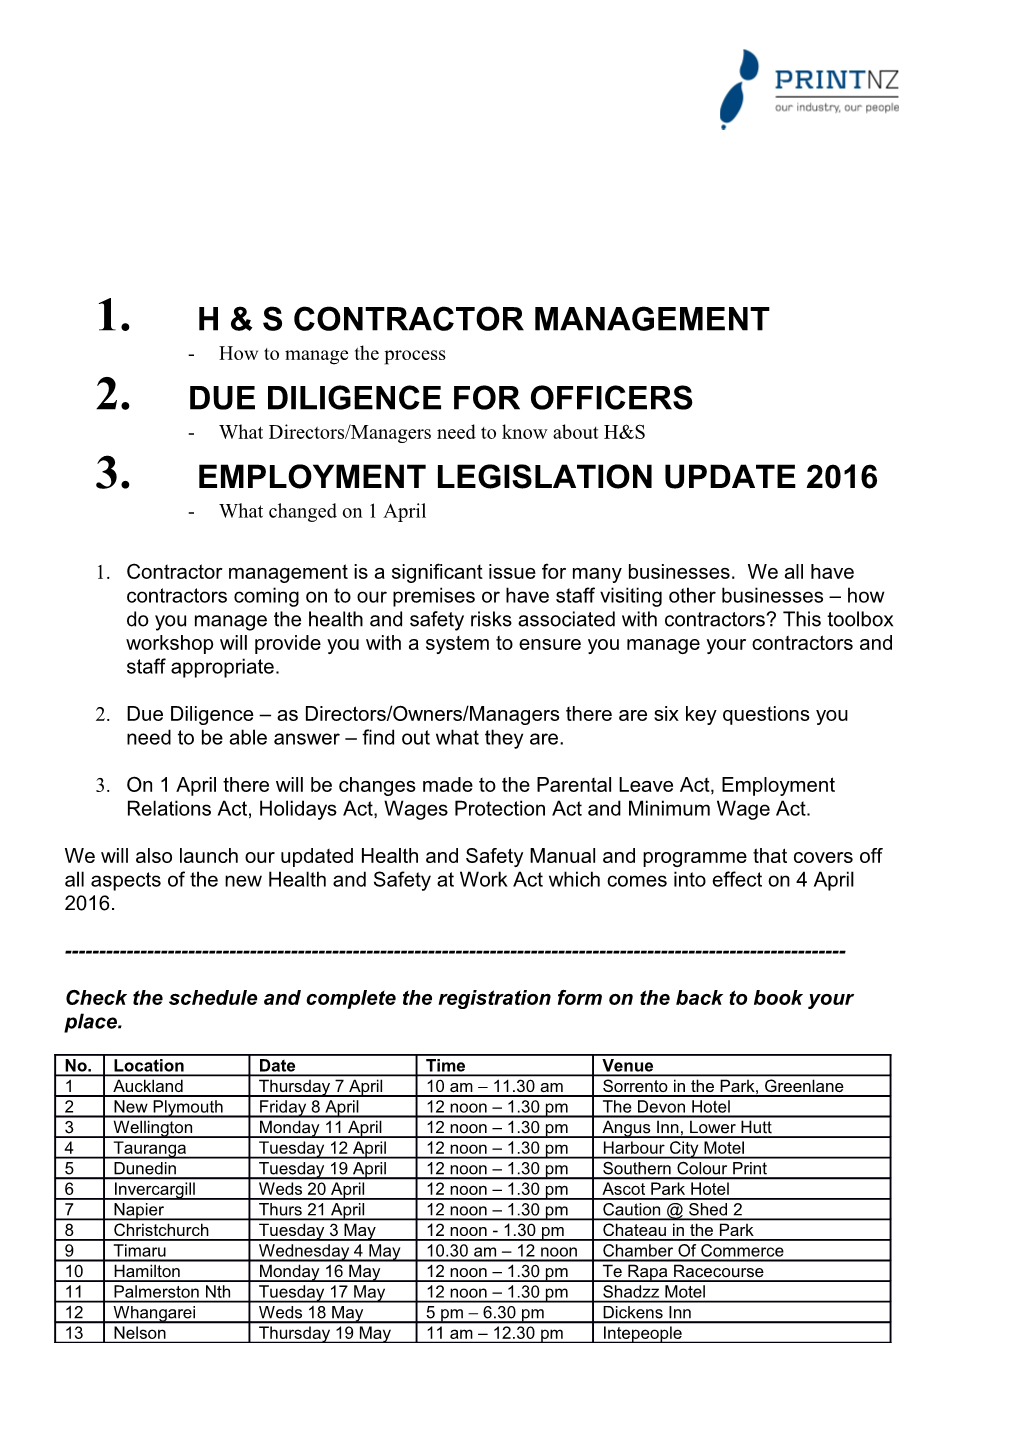 1. H & S Contractor Management